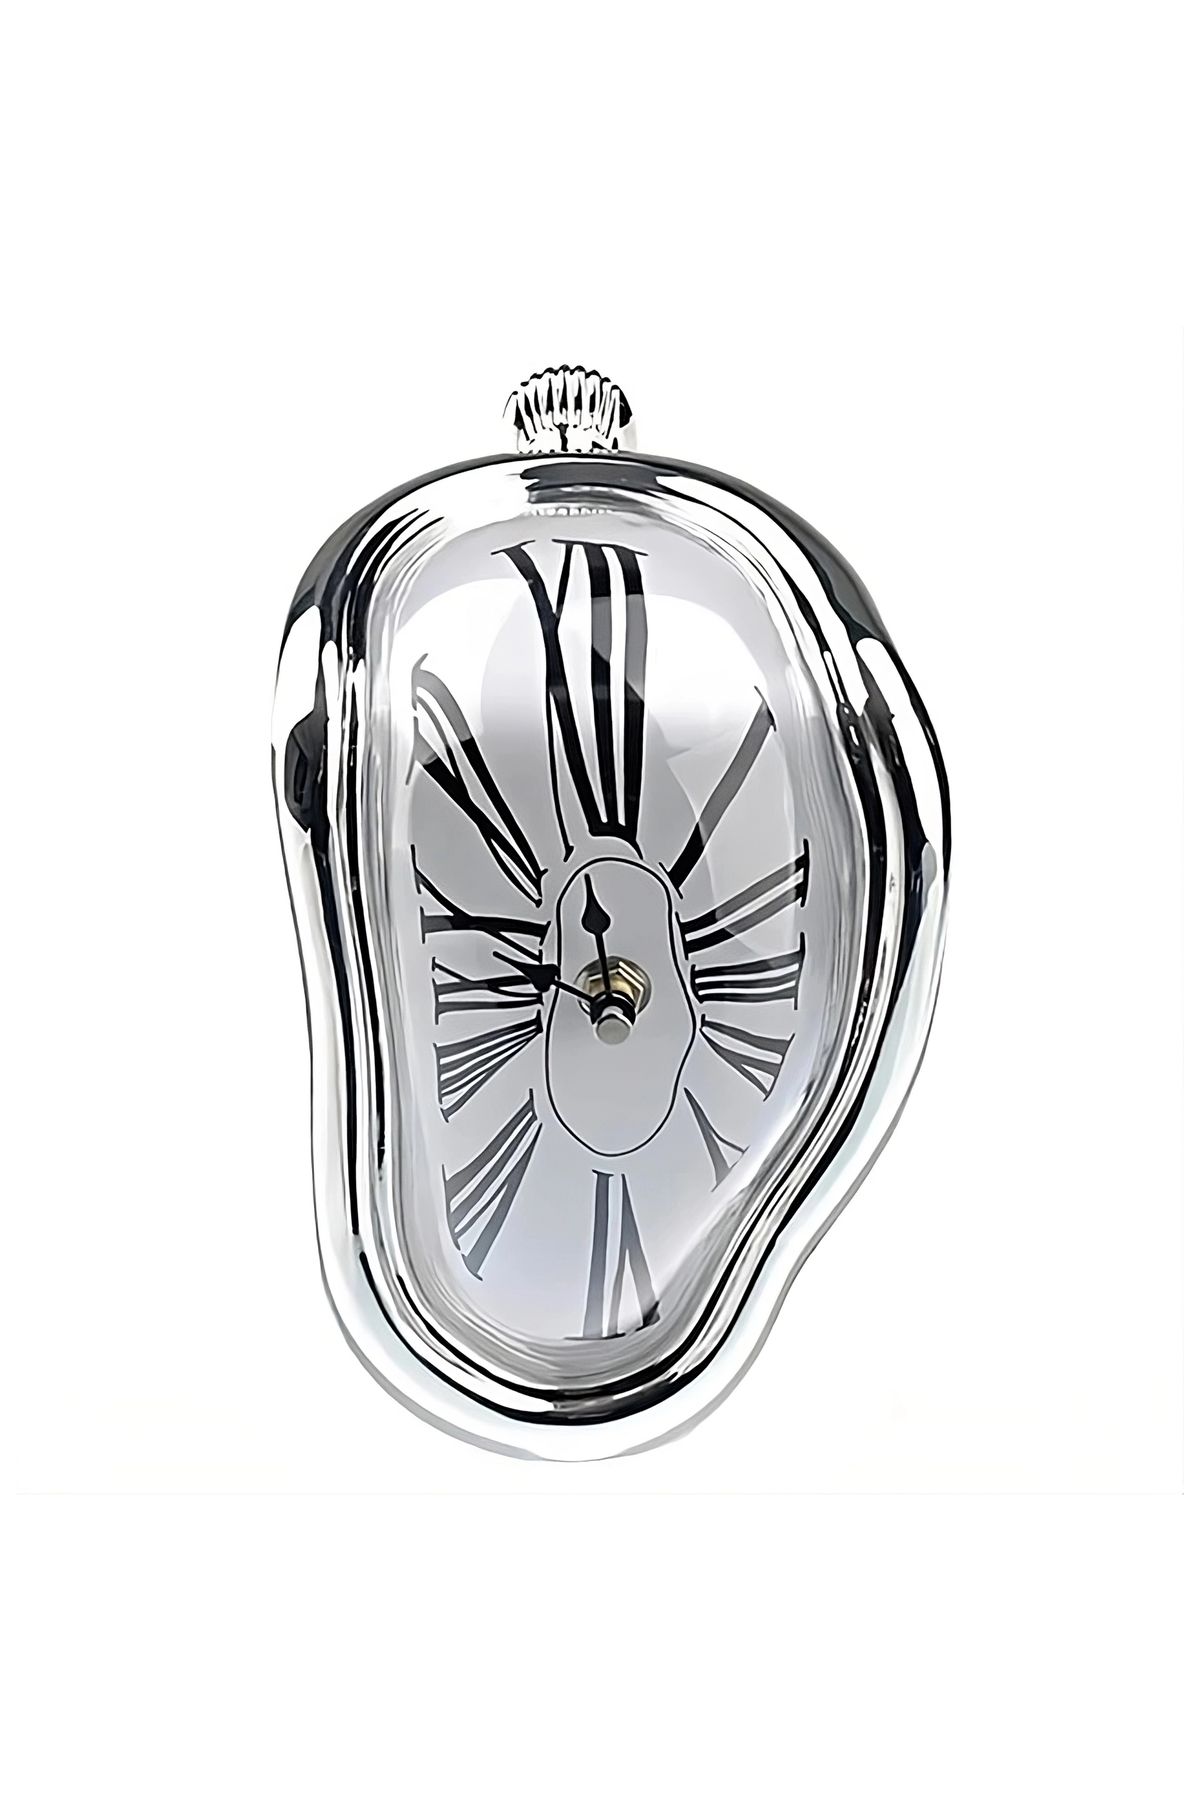 Spelt Eriyen Saat Salvador Dali Melting Clock Sürrealist Dekoratif